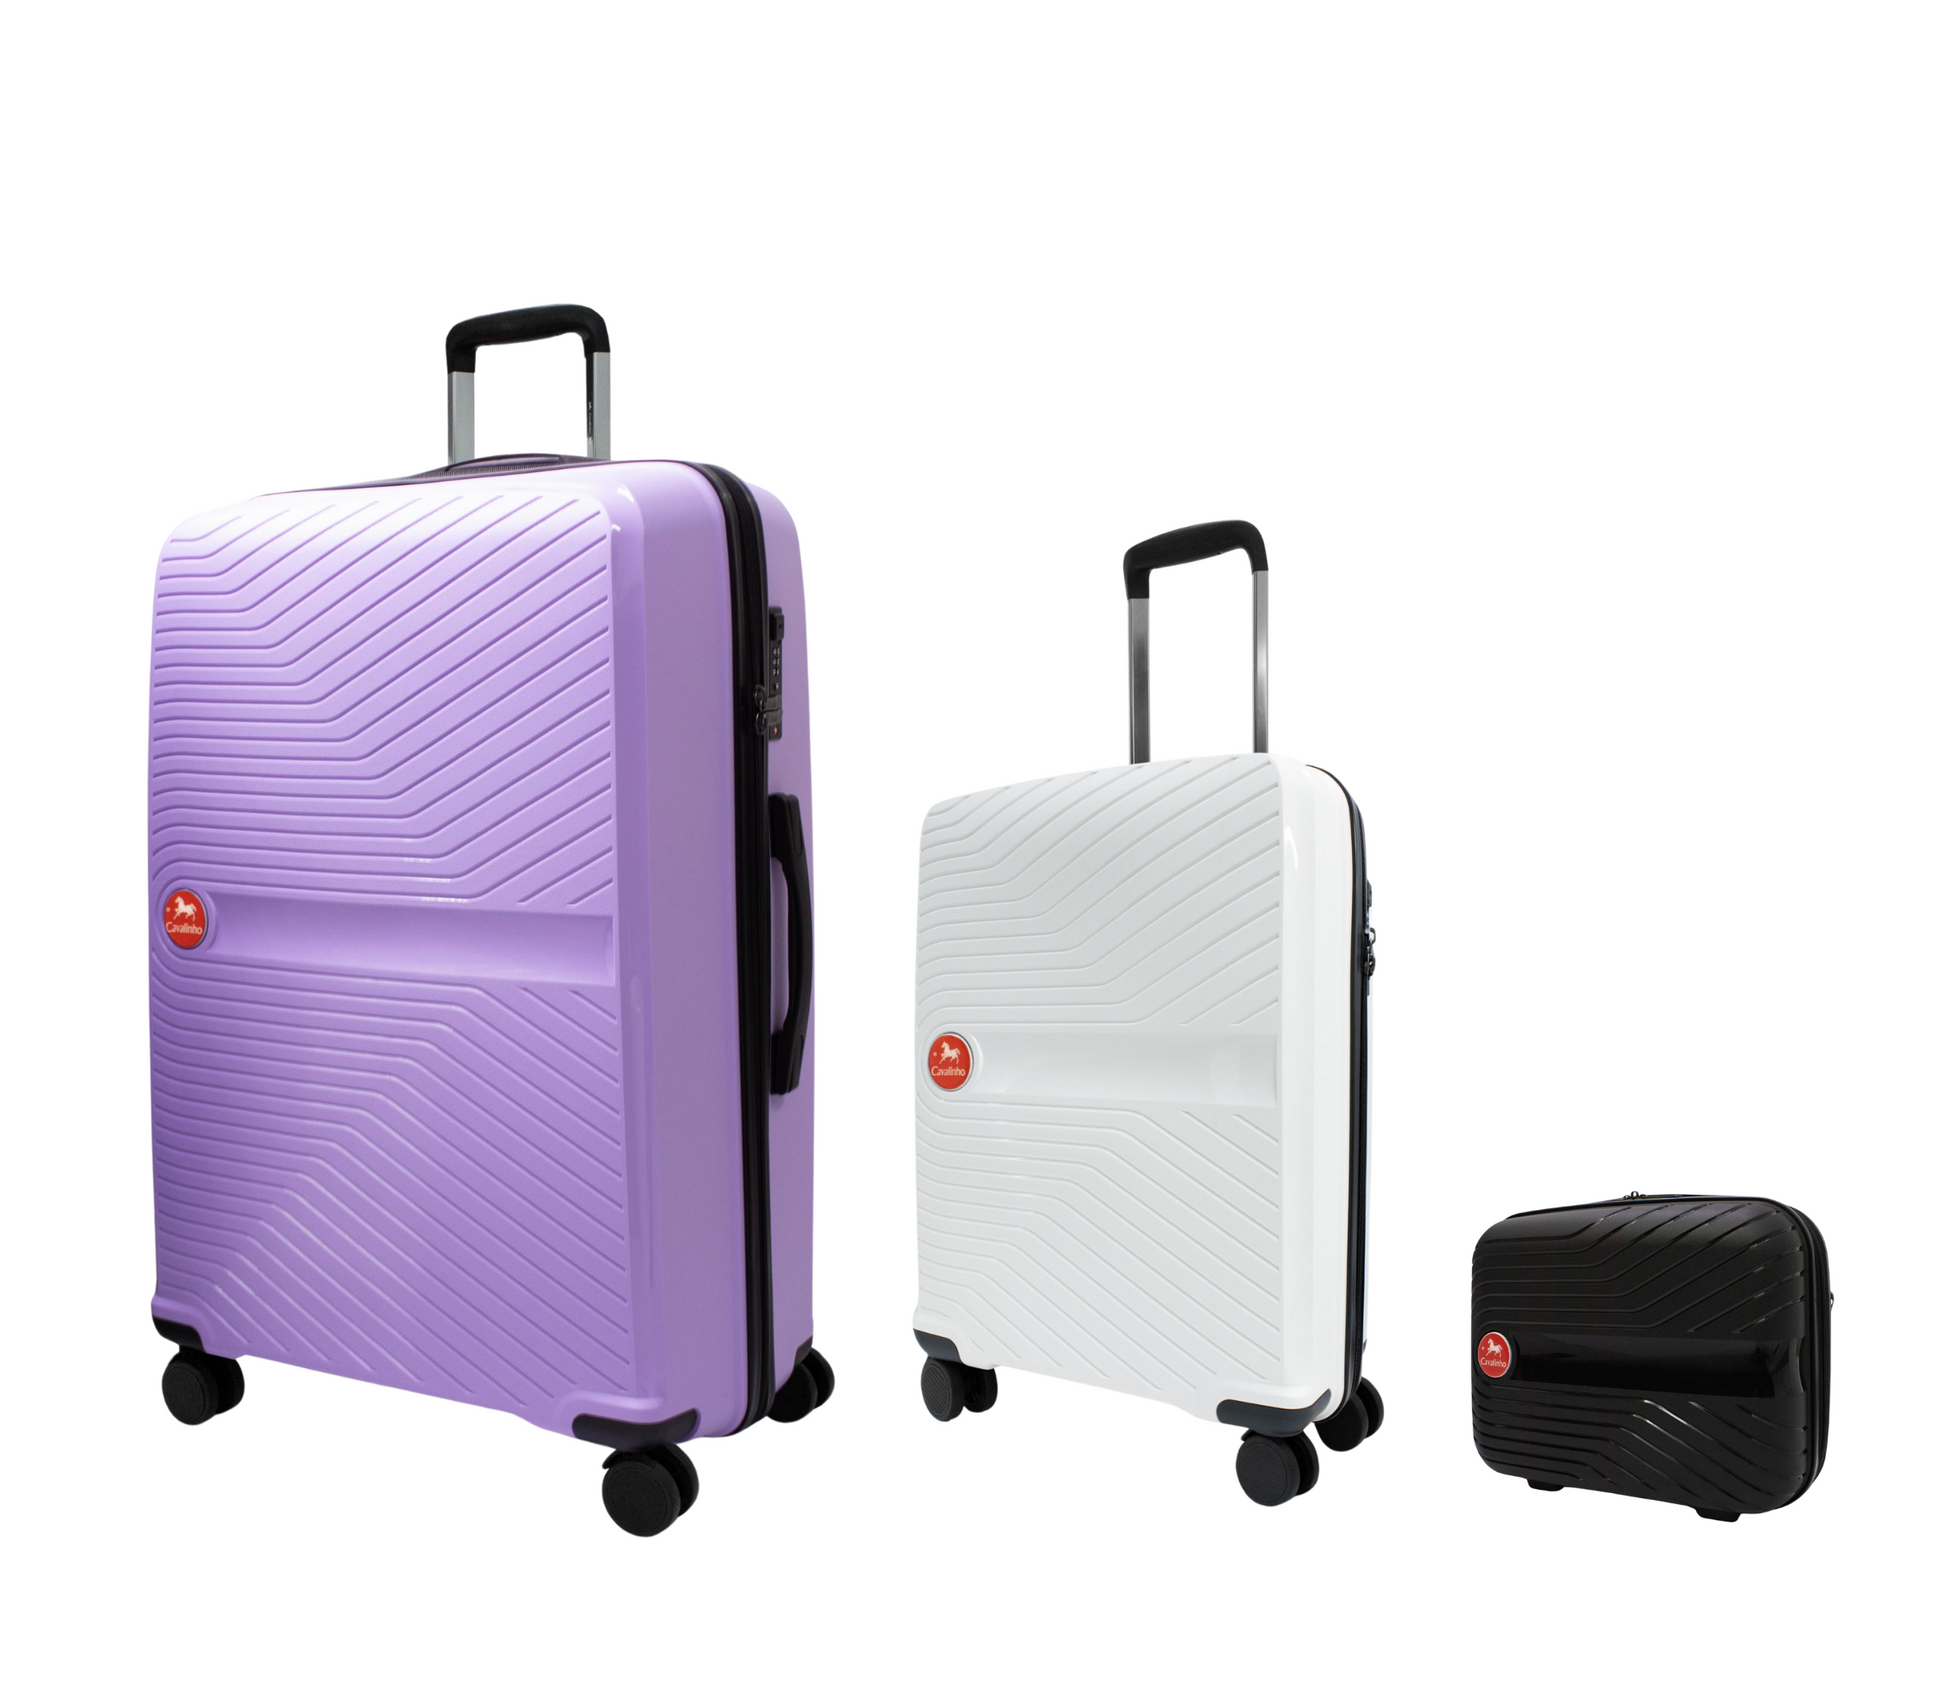 Cavalinho Colorful 3 Piece Luggage Set (15", 19" & 28") - Black White Lilac - 68020004.010639.S151928._2